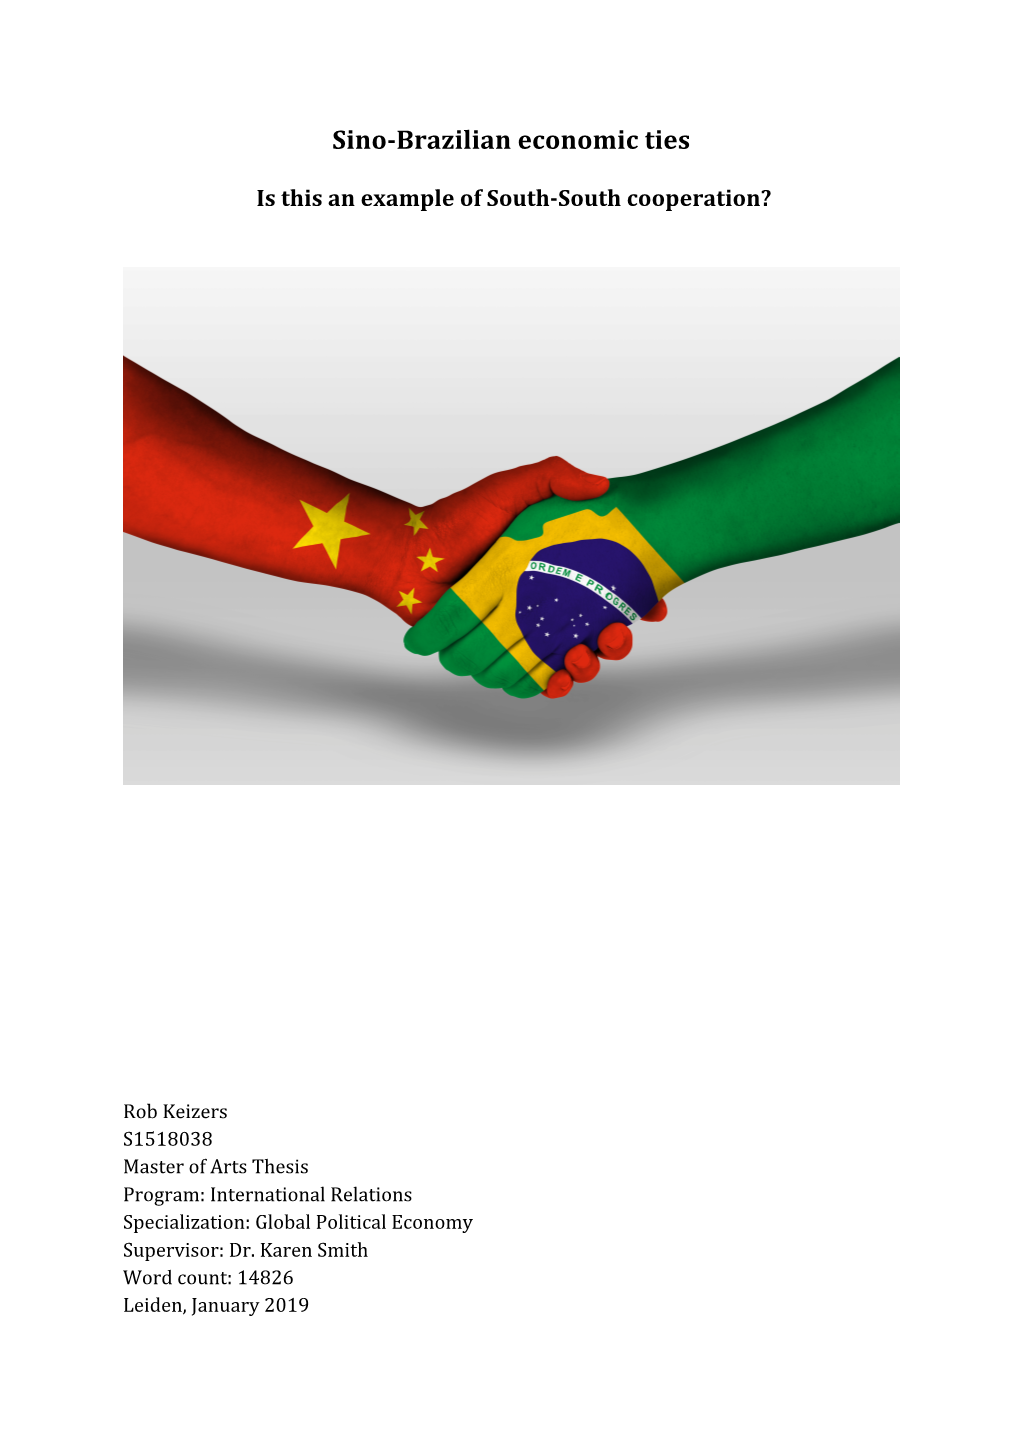 Sino-Brazilian Economic Ties